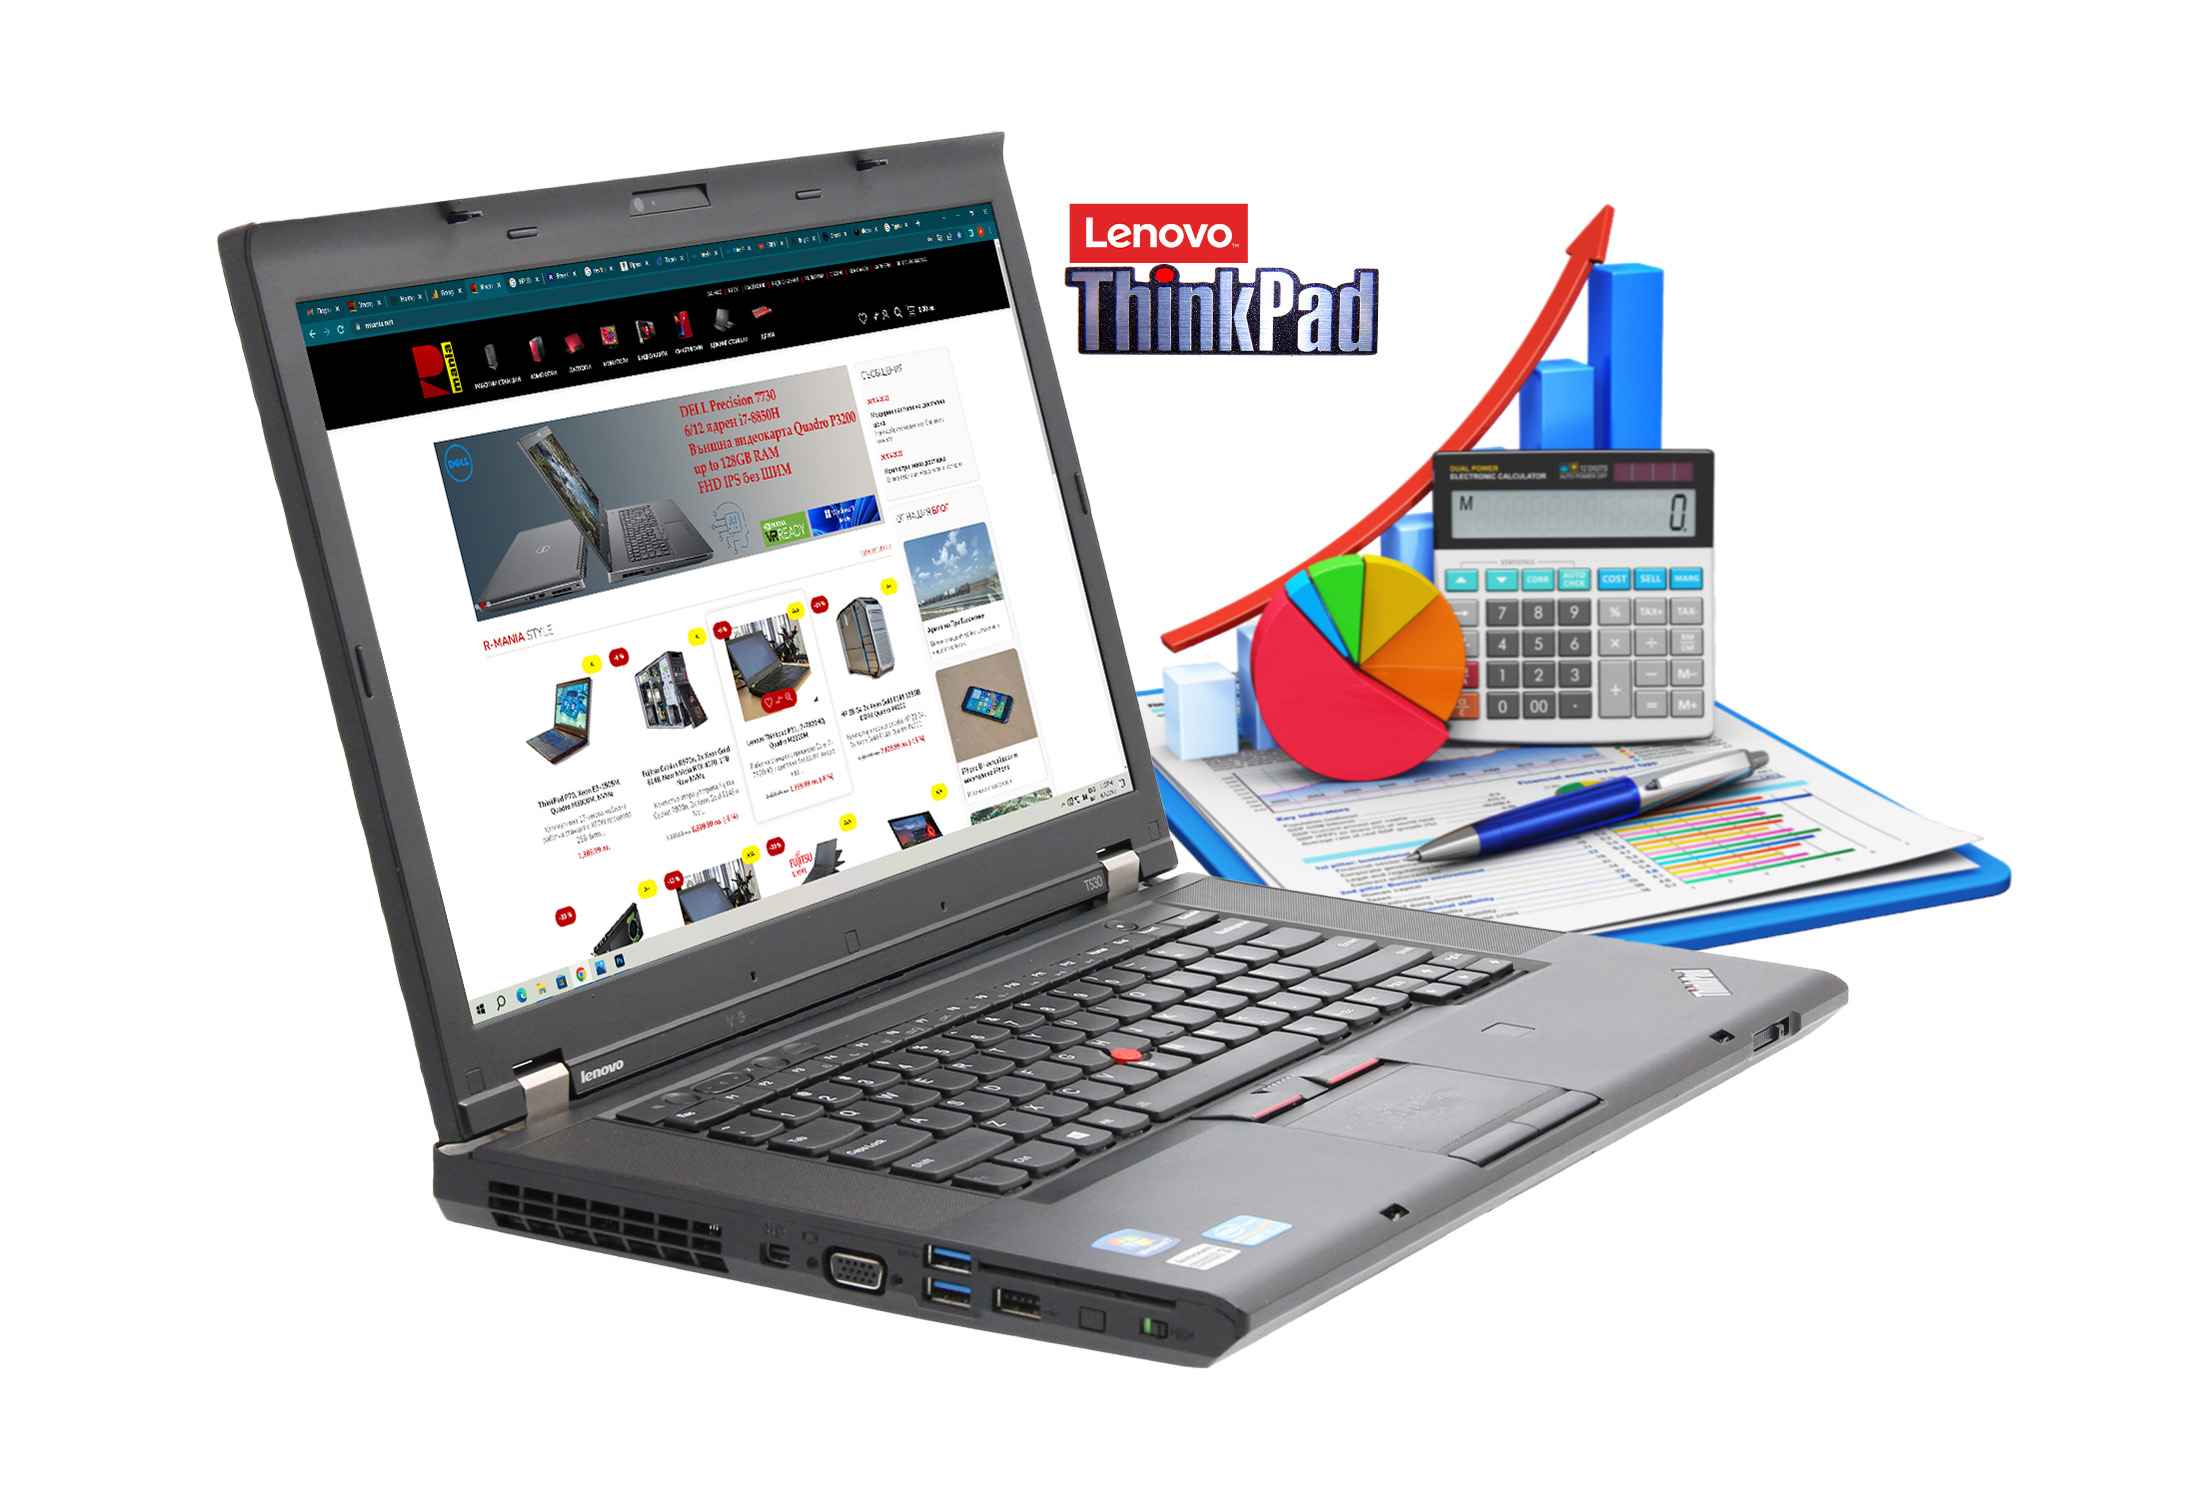 Lenovo Thinkpad T530 core i5-3320M 8GB RAM 256GB SSD Camera-S2yLg.jpeg